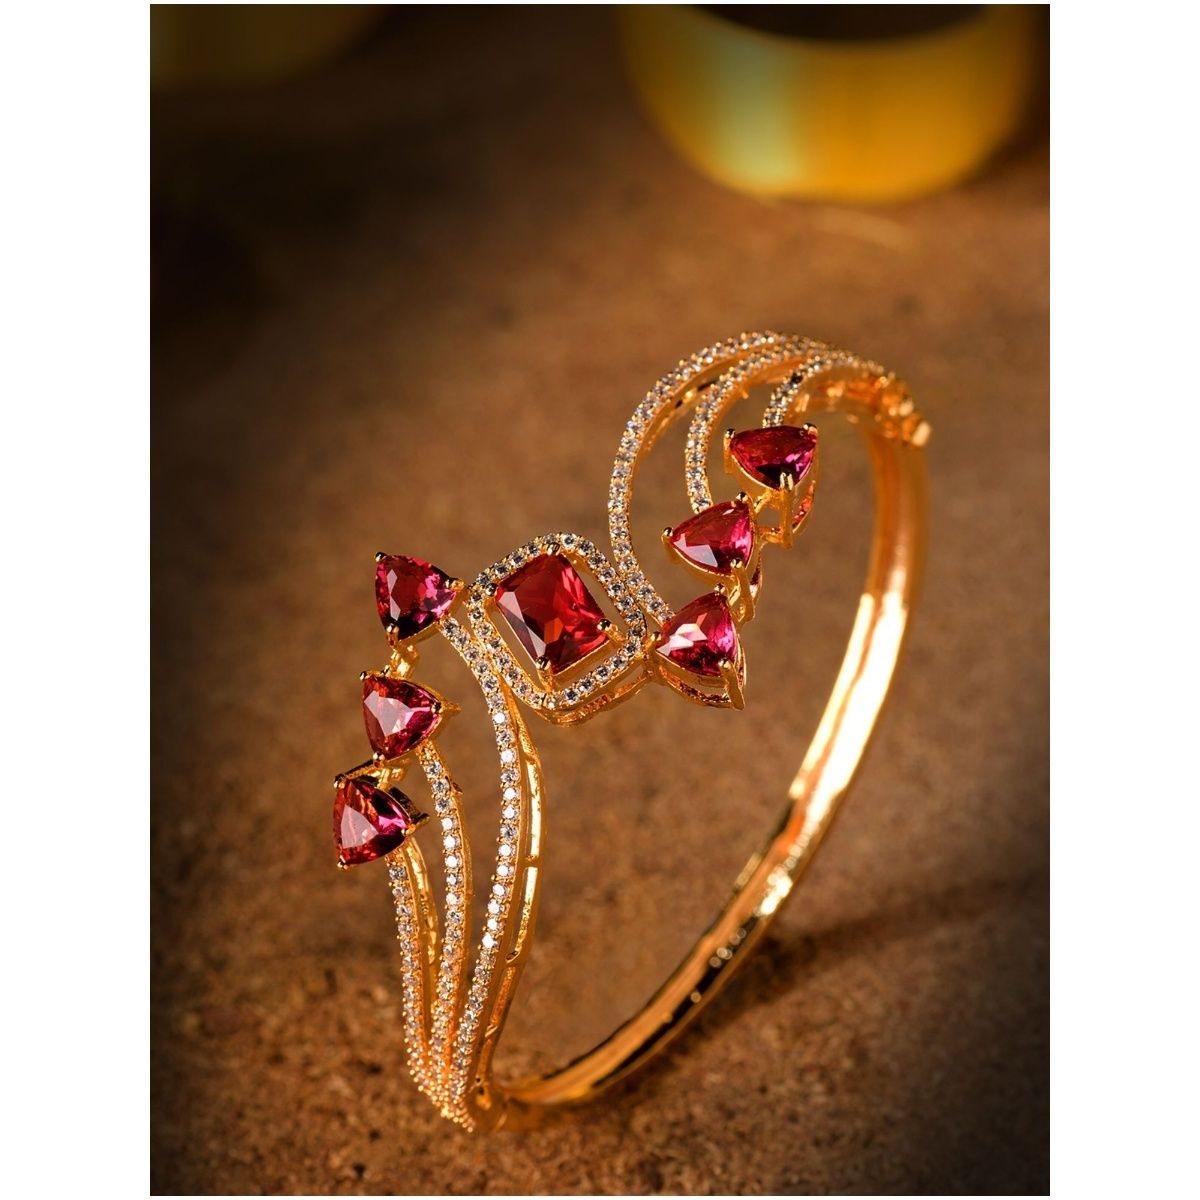 Gold Jewellery  Bridal Jewellery Stores  Best Jewellers in India  Khazana  Jewellery